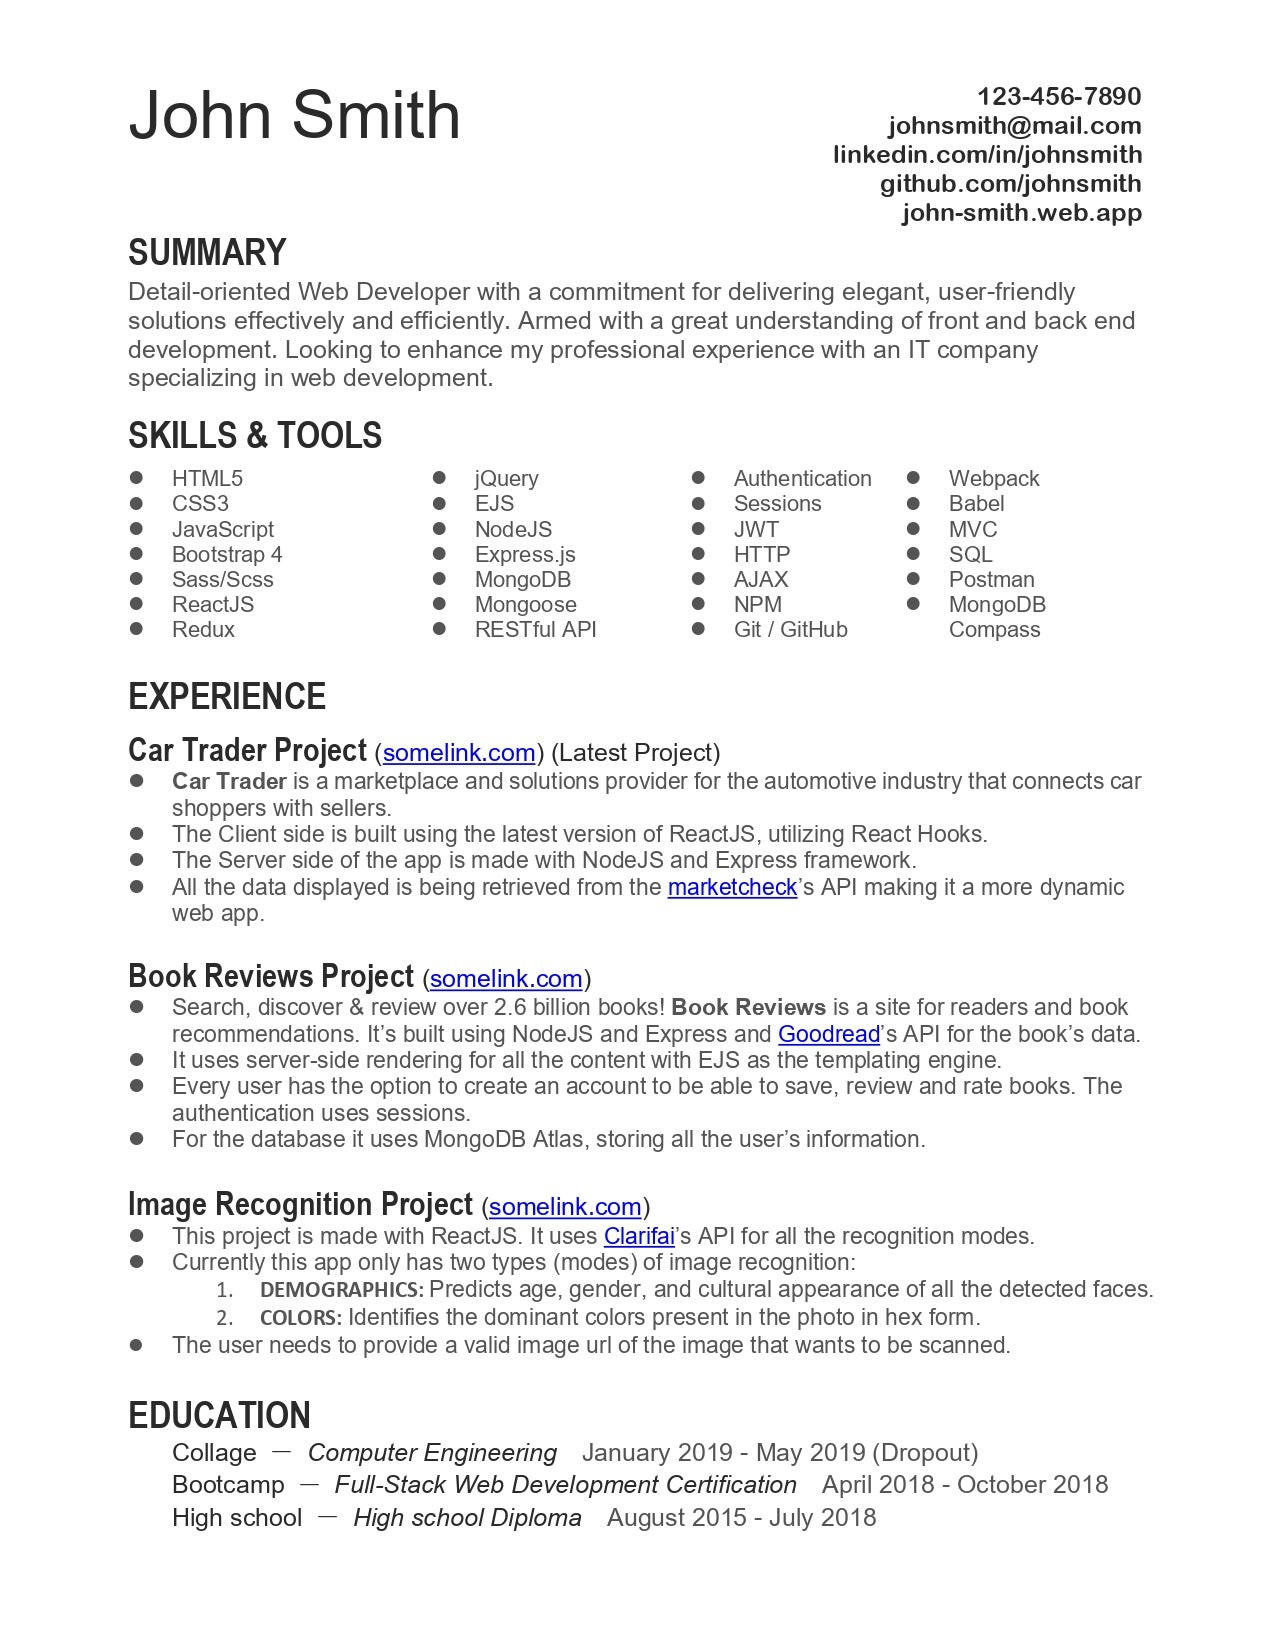 Samples Of Entry Level Web Developers Resume Resume for Entry-level Web Developer : R/resumes